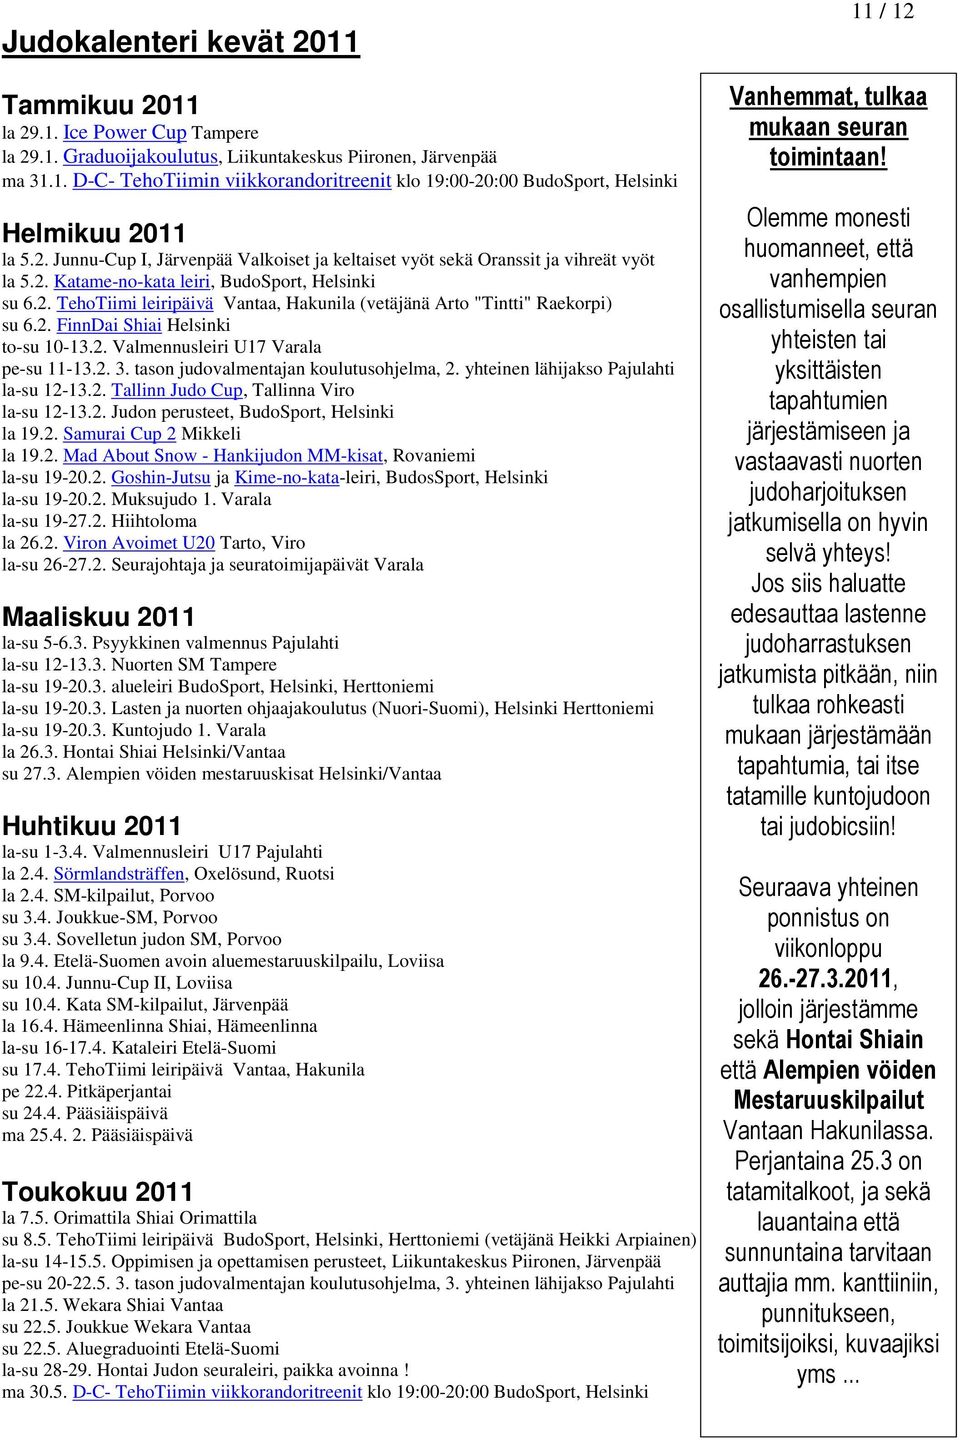 2. FinnDai Shiai Helsinki to-su 10-13.2. Valmennusleiri U17 Varala pe-su 11-13.2. 3. tason judovalmentajan koulutusohjelma, 2. yhteinen lähijakso Pajulahti la-su 12-13.2. Tallinn Judo Cup, Tallinna Viro la-su 12-13.